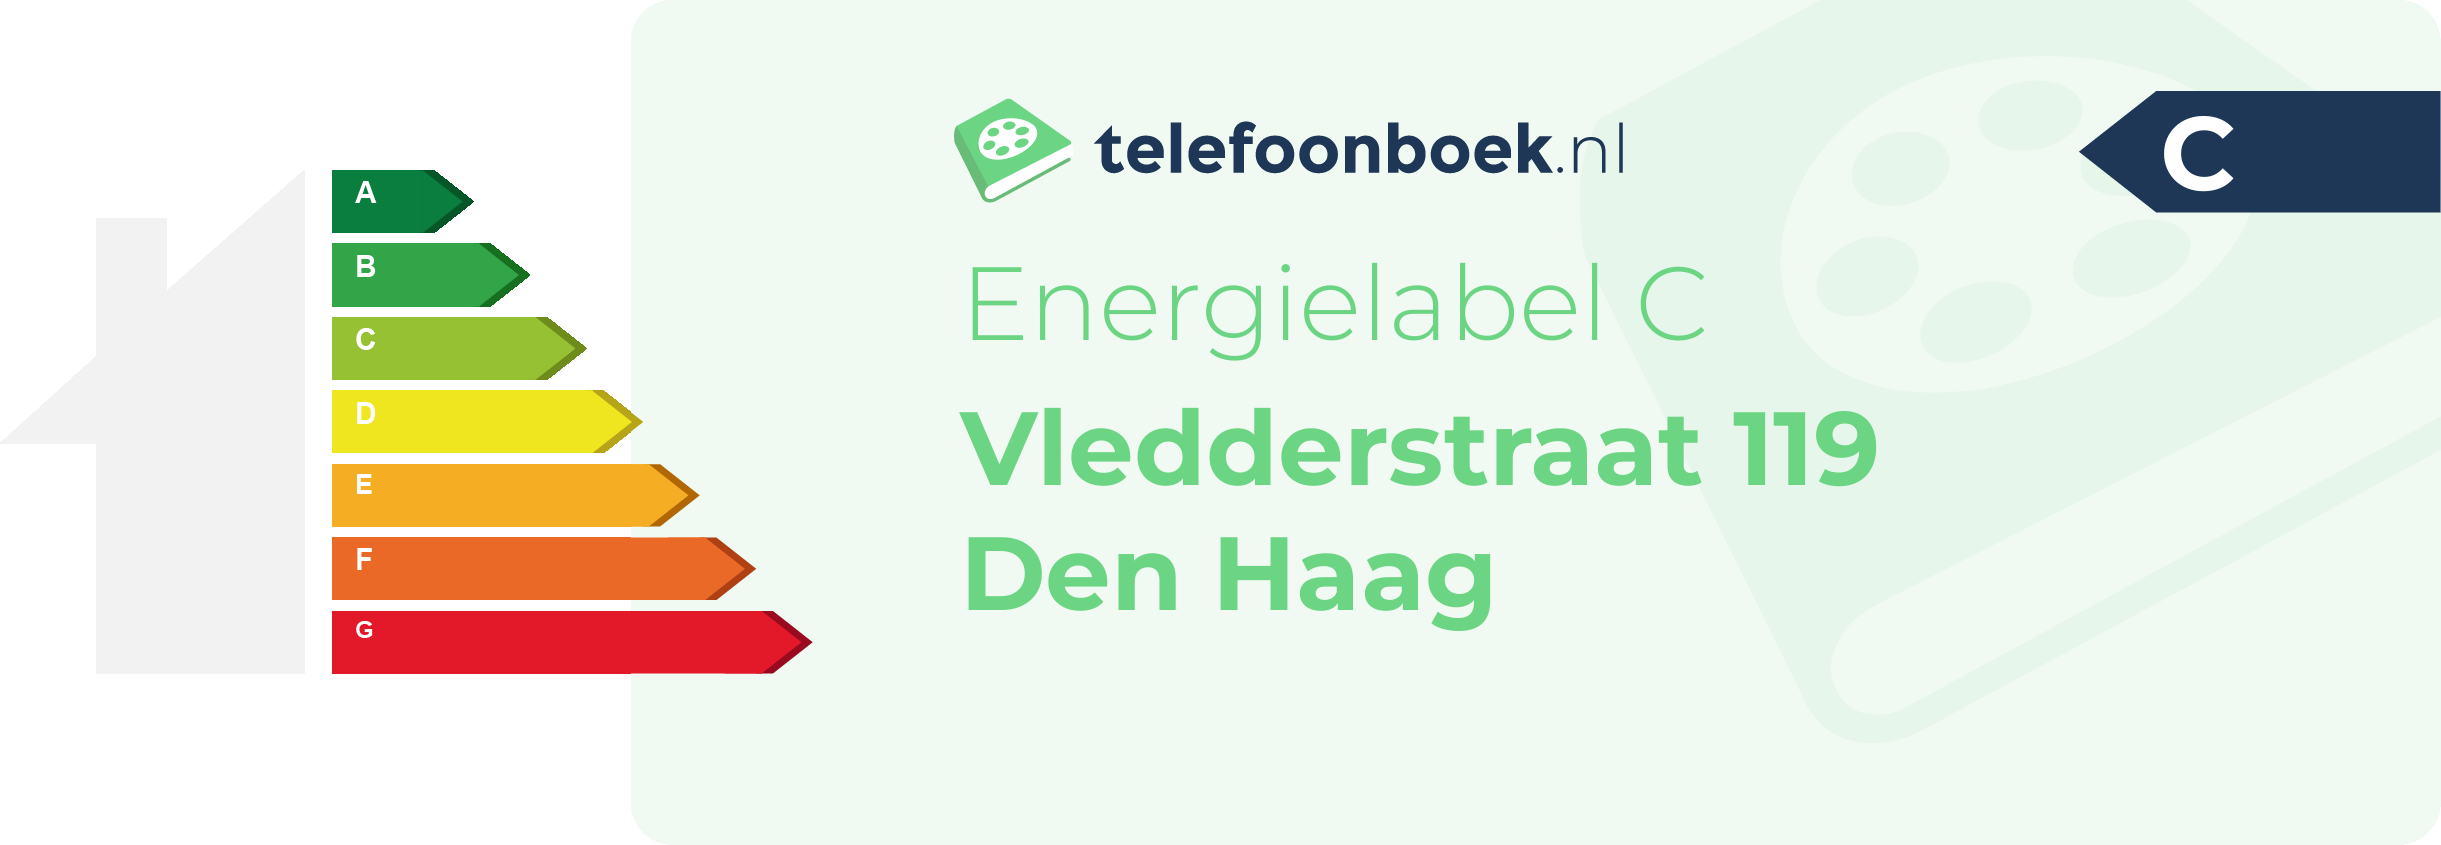 Energielabel Vledderstraat 119 Den Haag